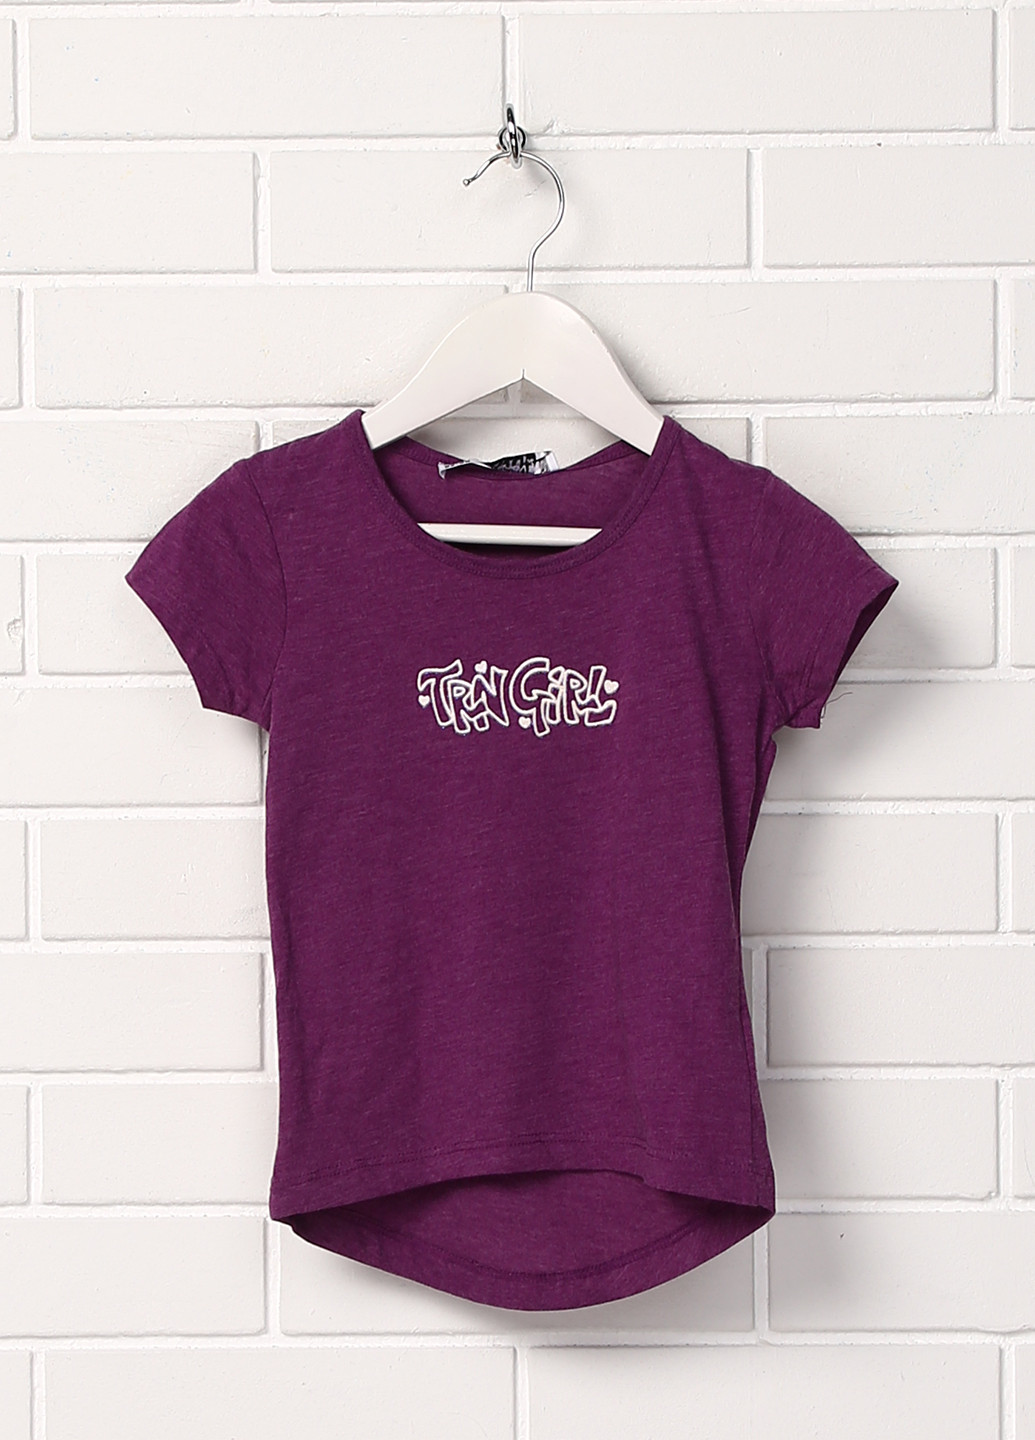 Фиолетовая летняя футболка с коротким рукавом Terranova